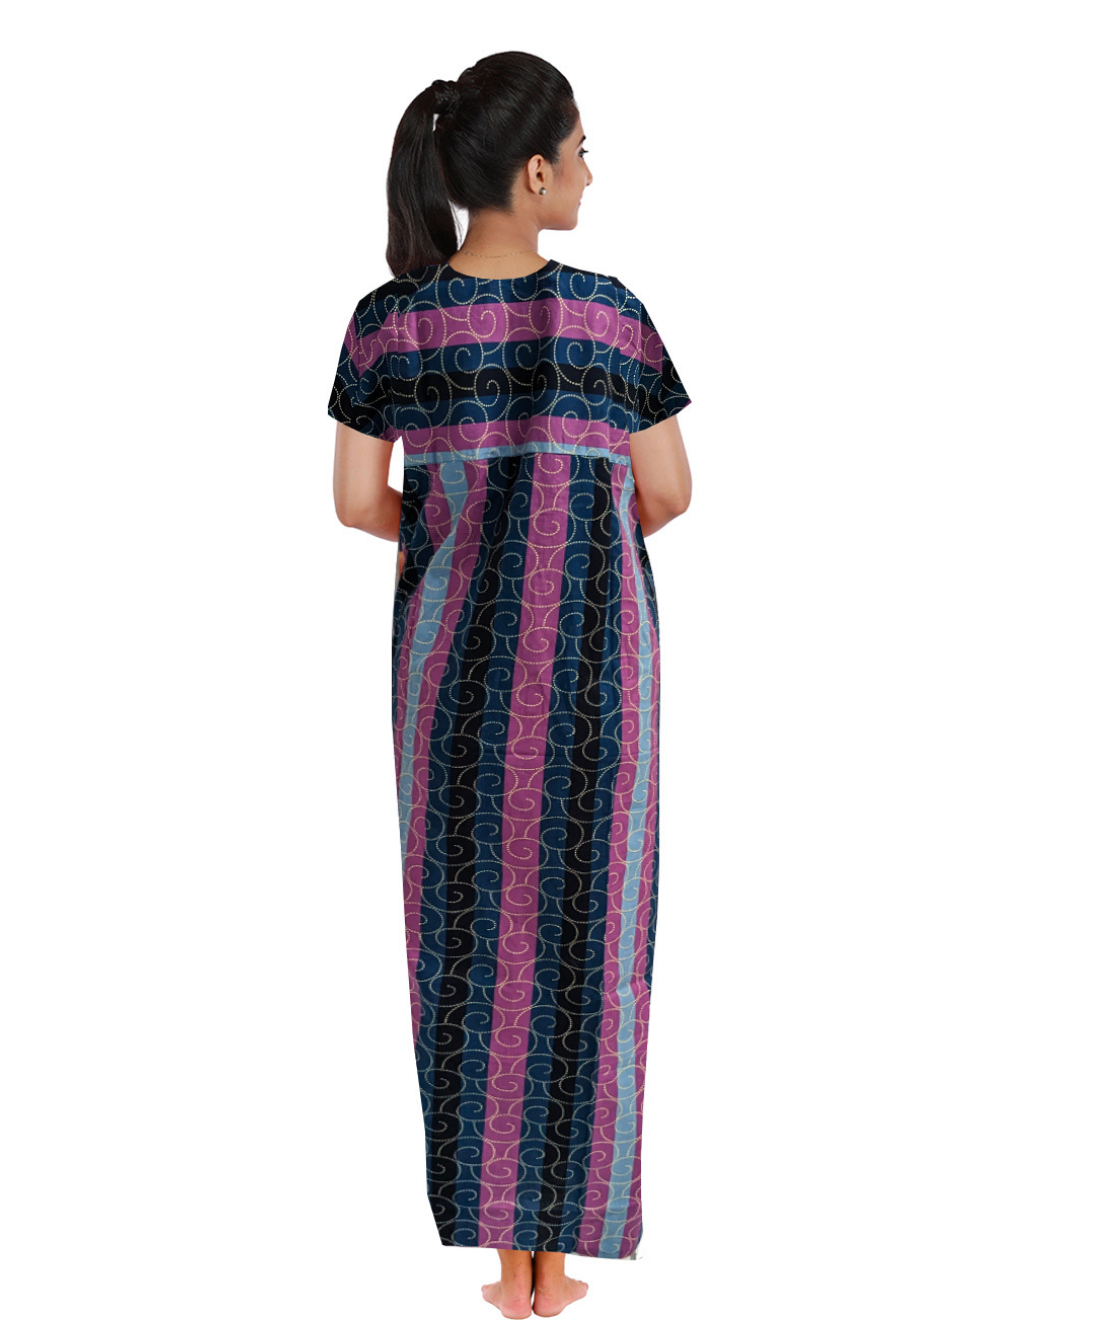 New MANGAI Premium Regular Fit Cotton Nighties - All Over Printed Stylish Nightwear for Stylish Women | Beautiful Nighties for Stylish Women's | Shrinkage Free Nighties | New CHUDI Cut Model